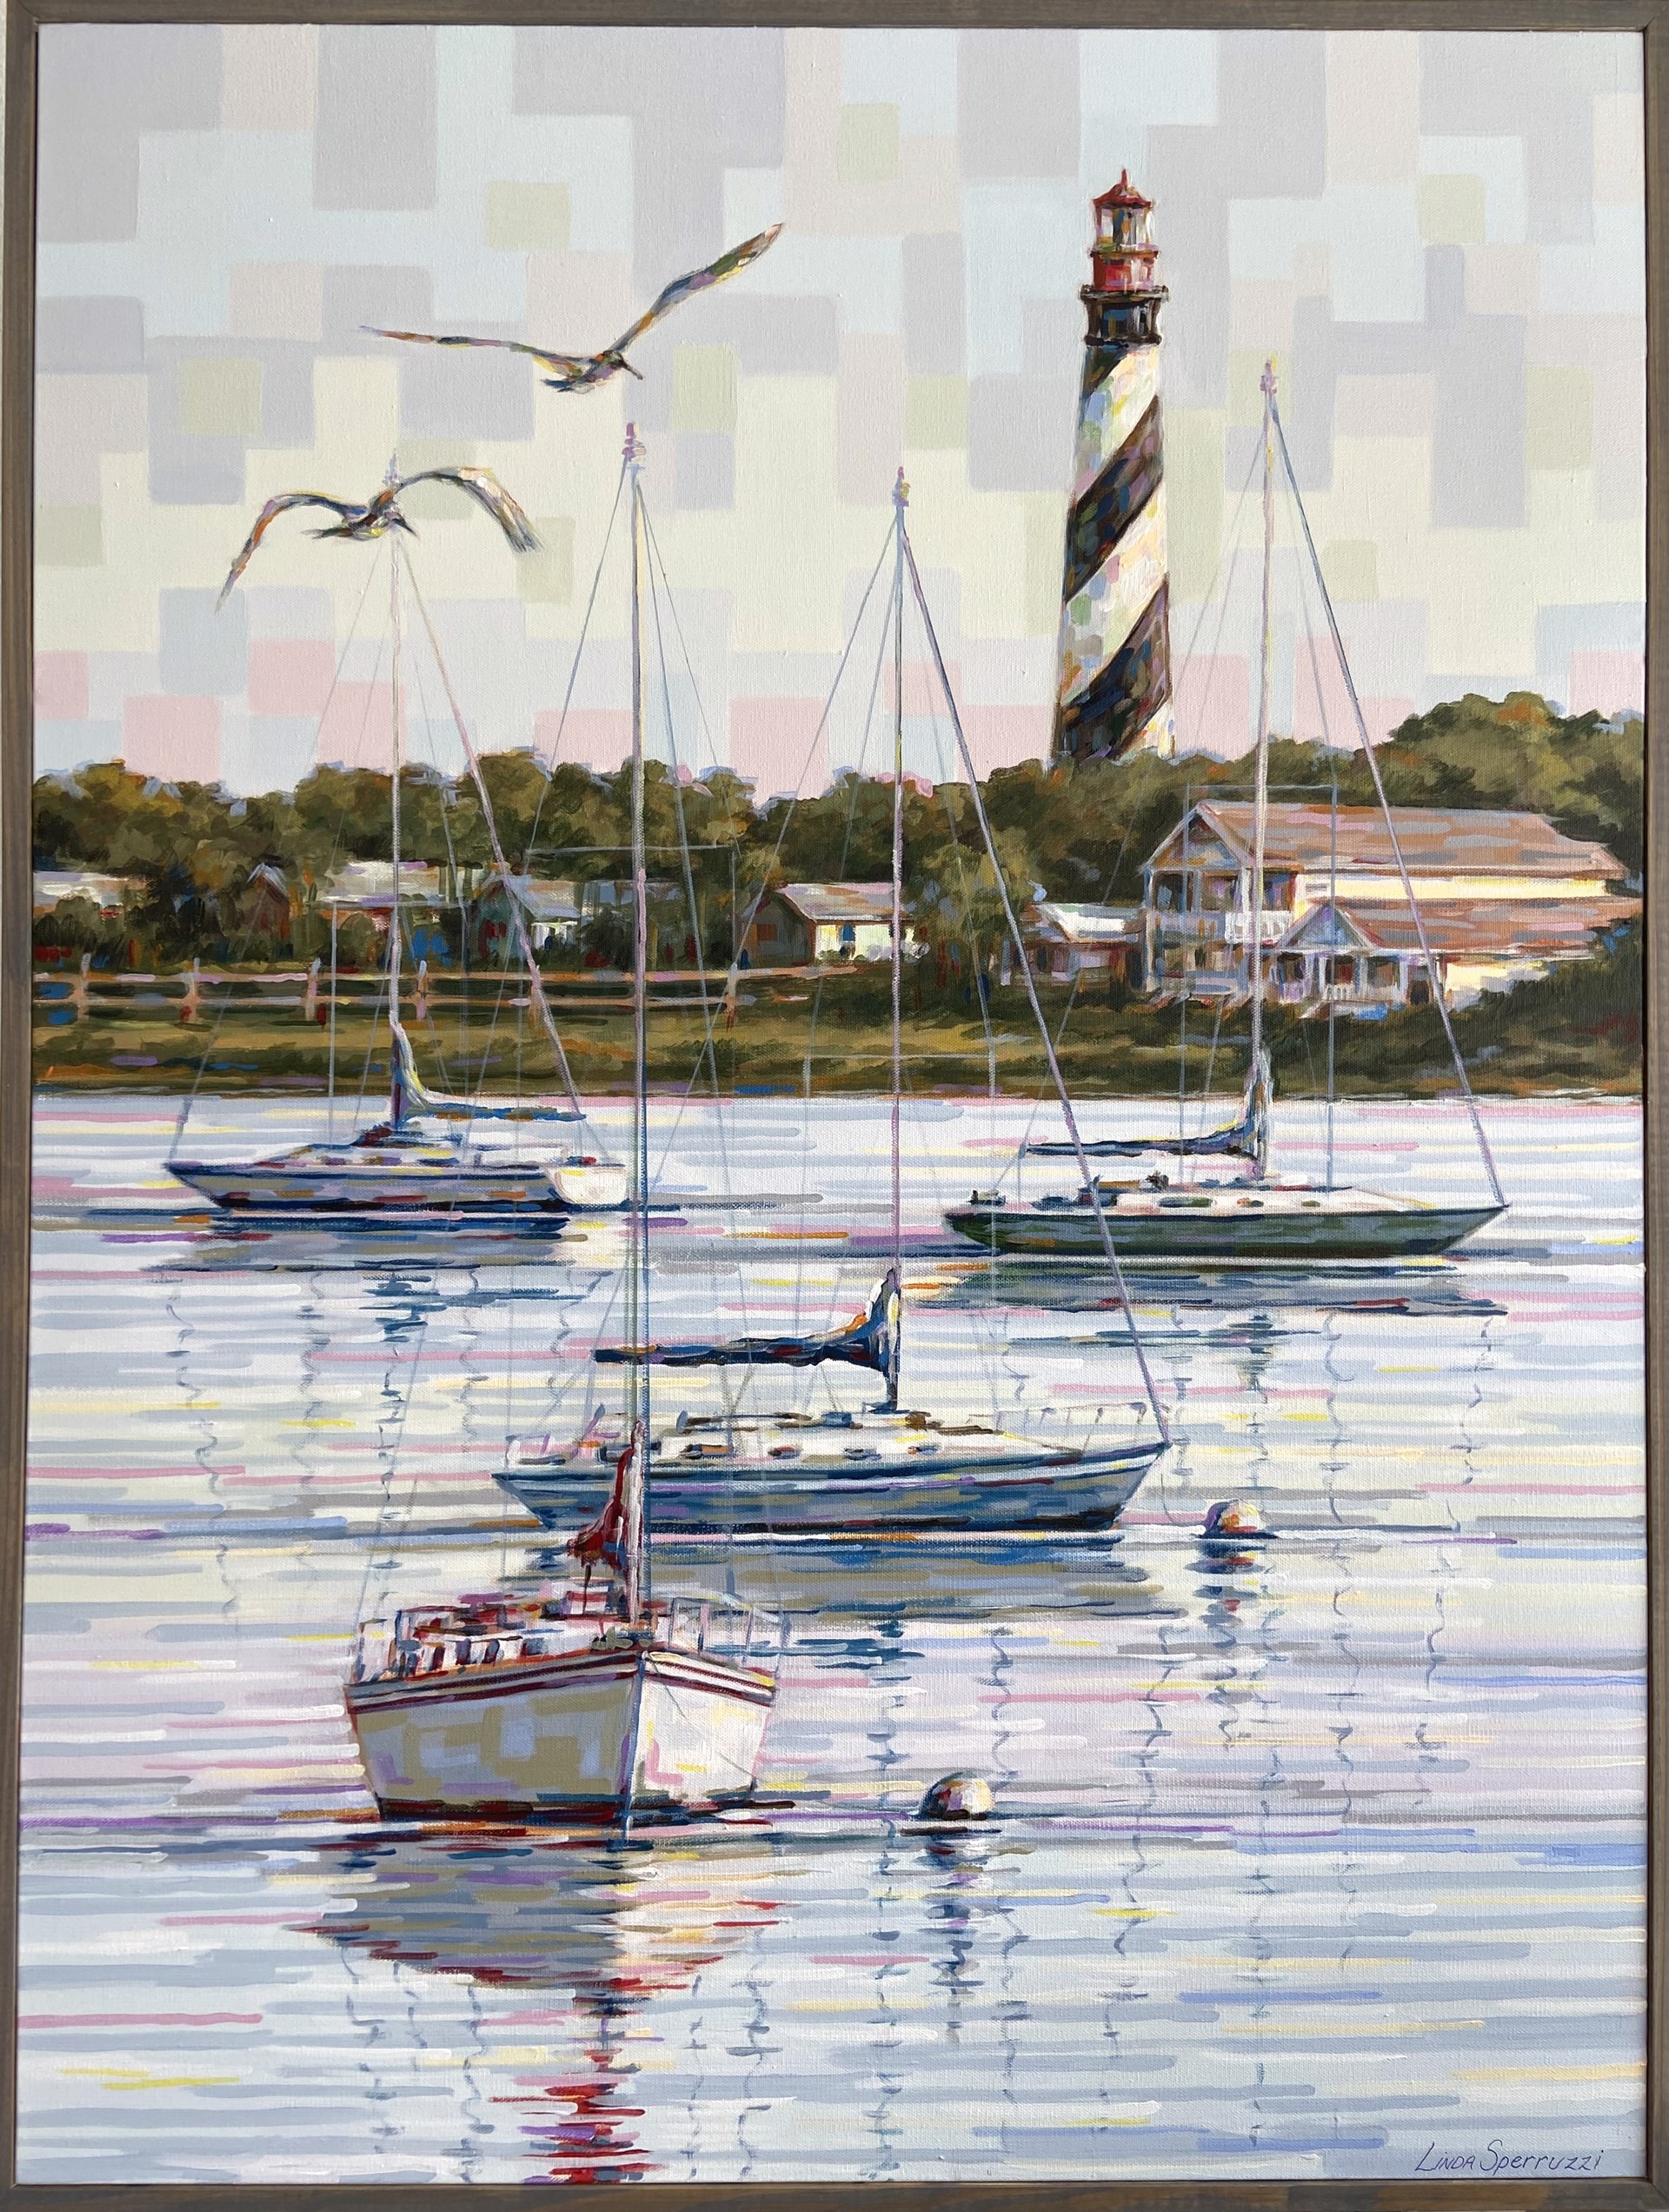 Peaceful Views of the Saint Augustine Lighthouse (Lightner) by Linda Sperruzzi